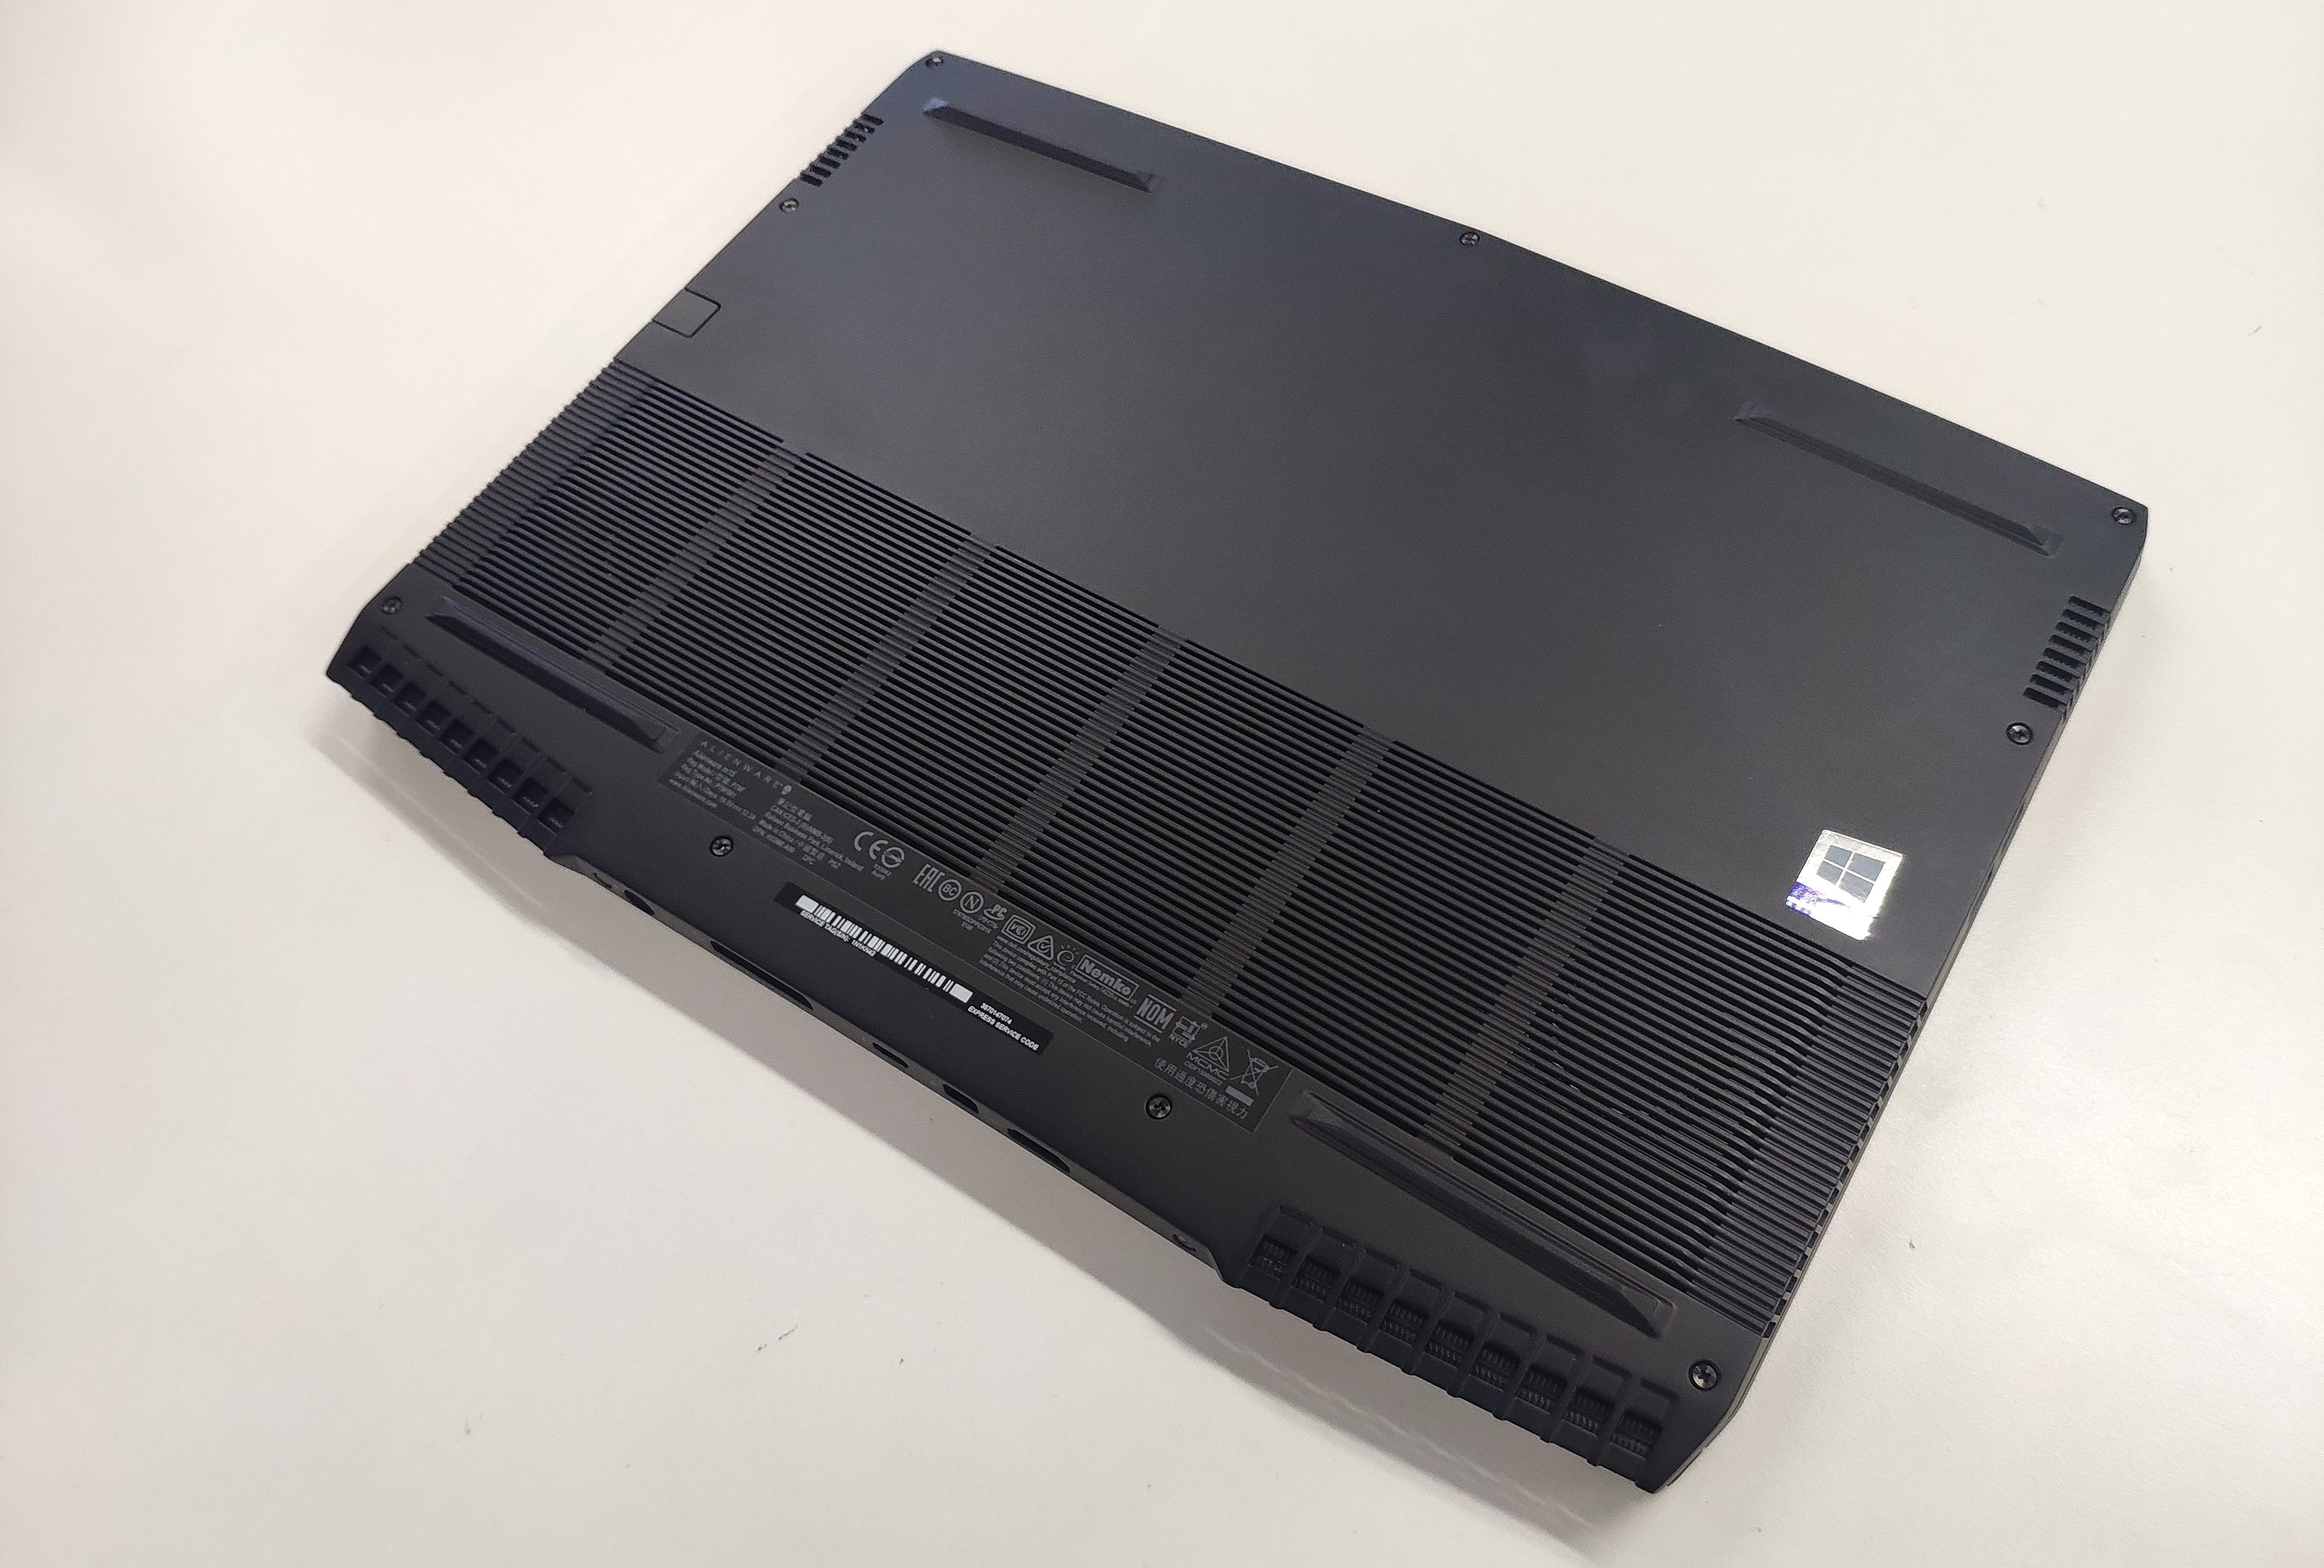 Обзор ноутбука Dell Alienware m15: тонкости гейминга